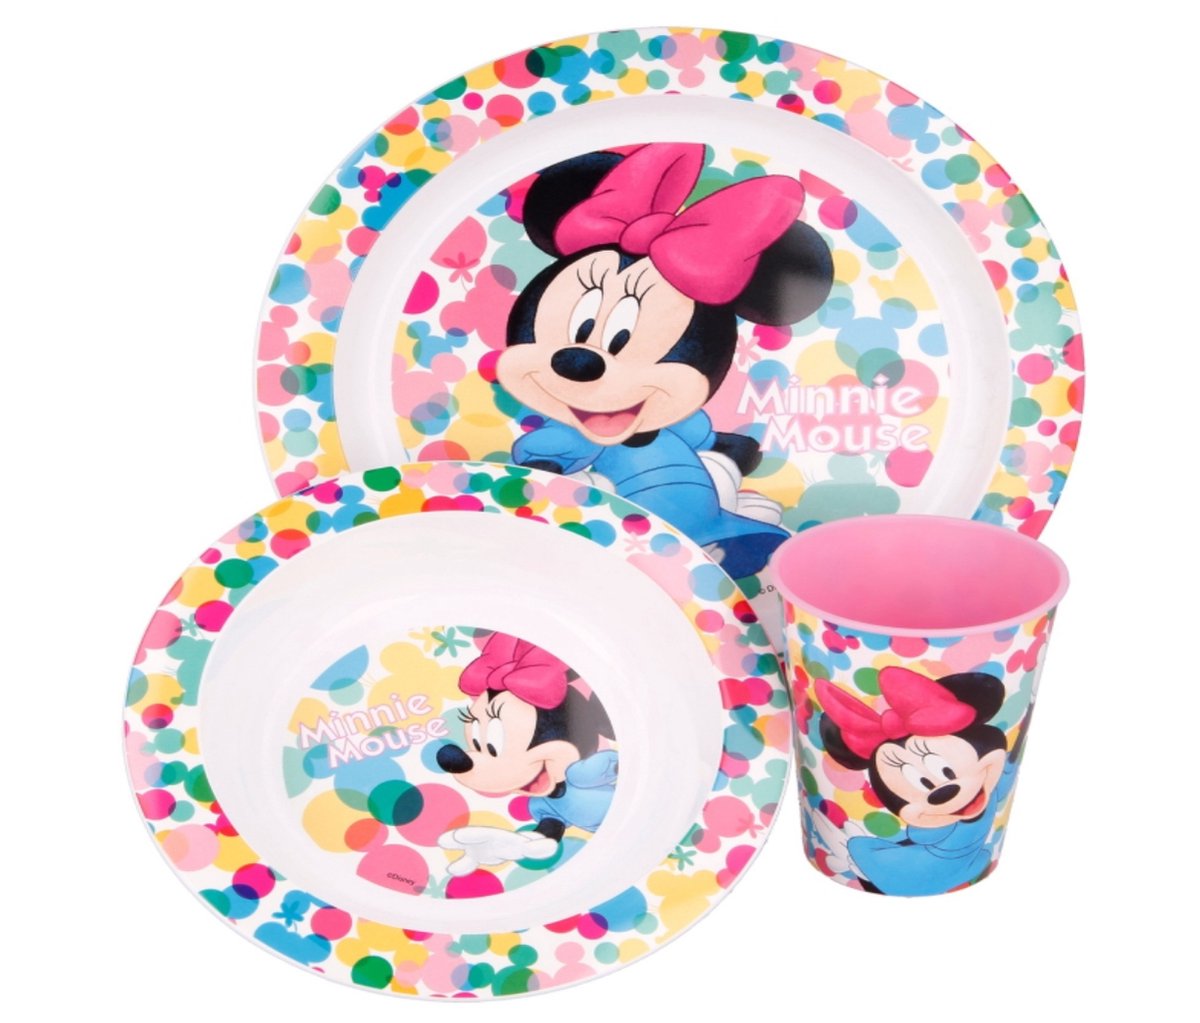 Minnie mouse 3 delig magnetron ontbijt - lunch set